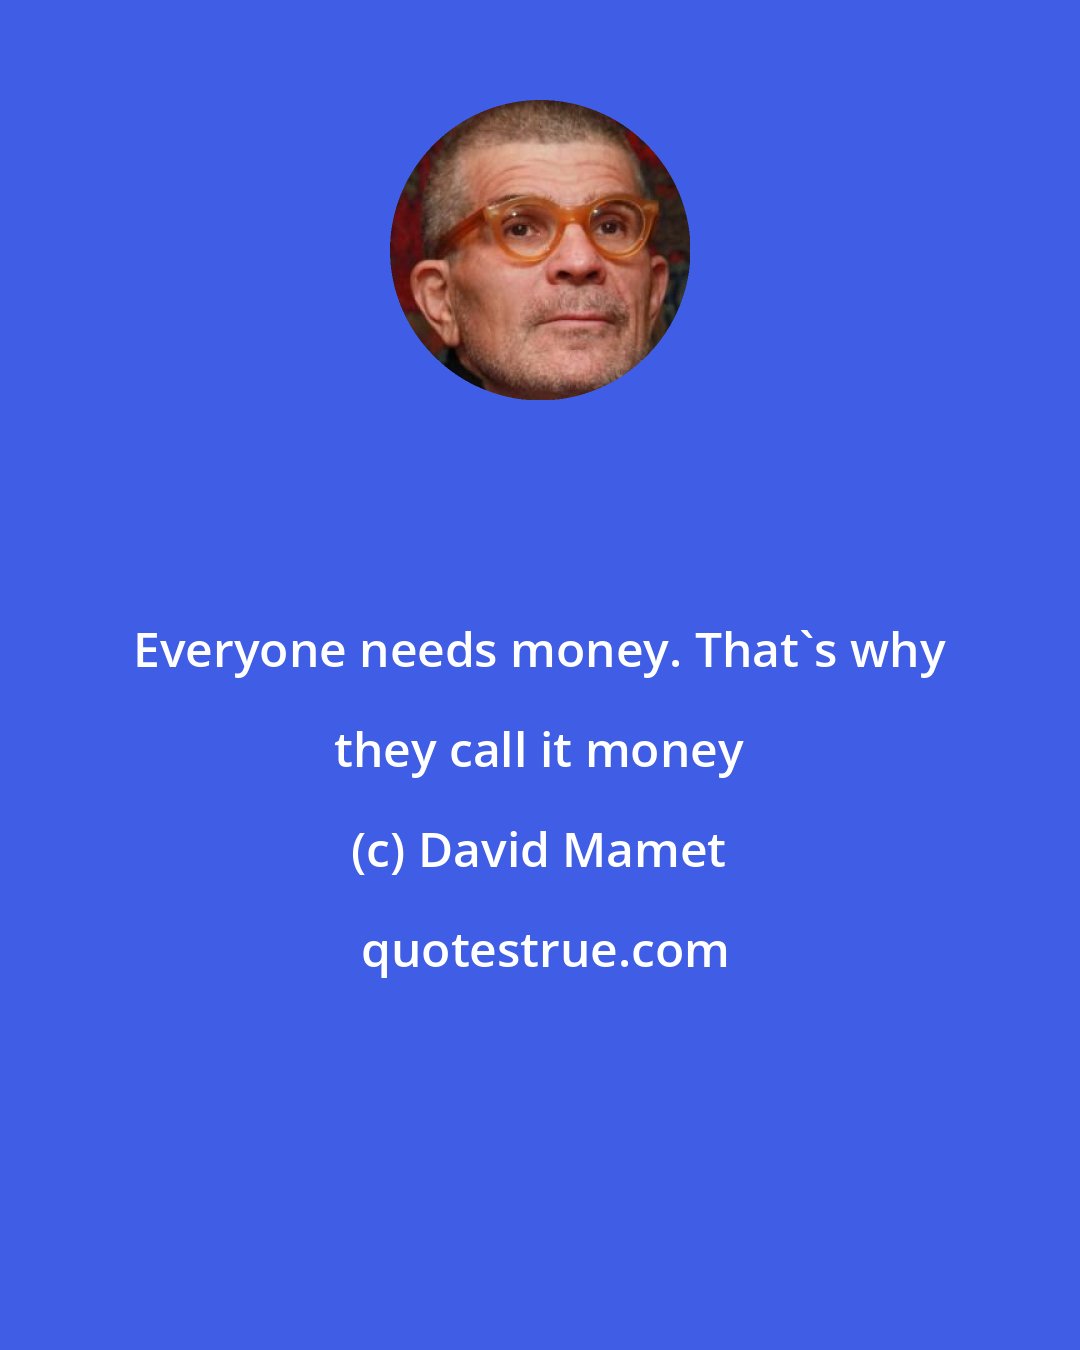 David Mamet: Everyone needs money. That's why they call it money